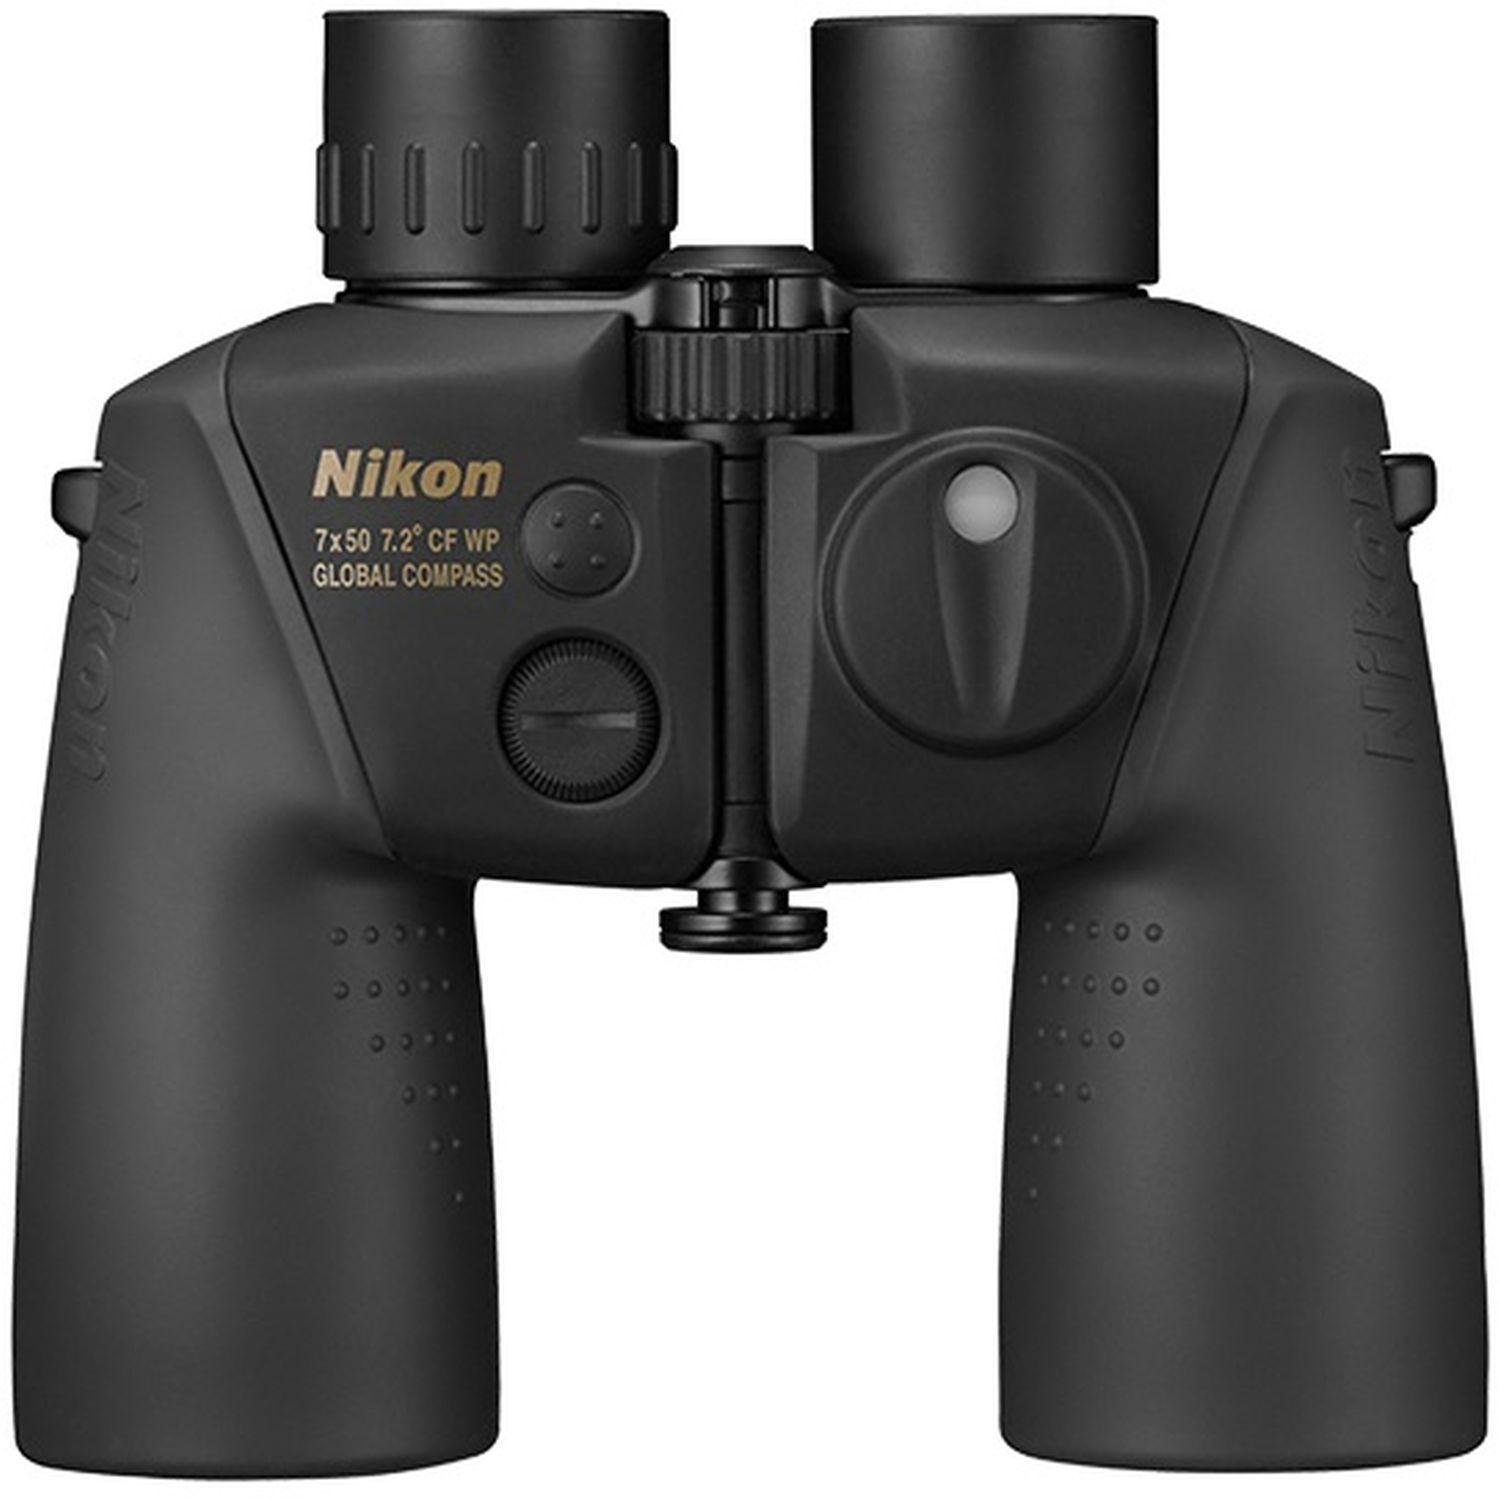 WP Nikon Compass 7x50CF Global Fernglas